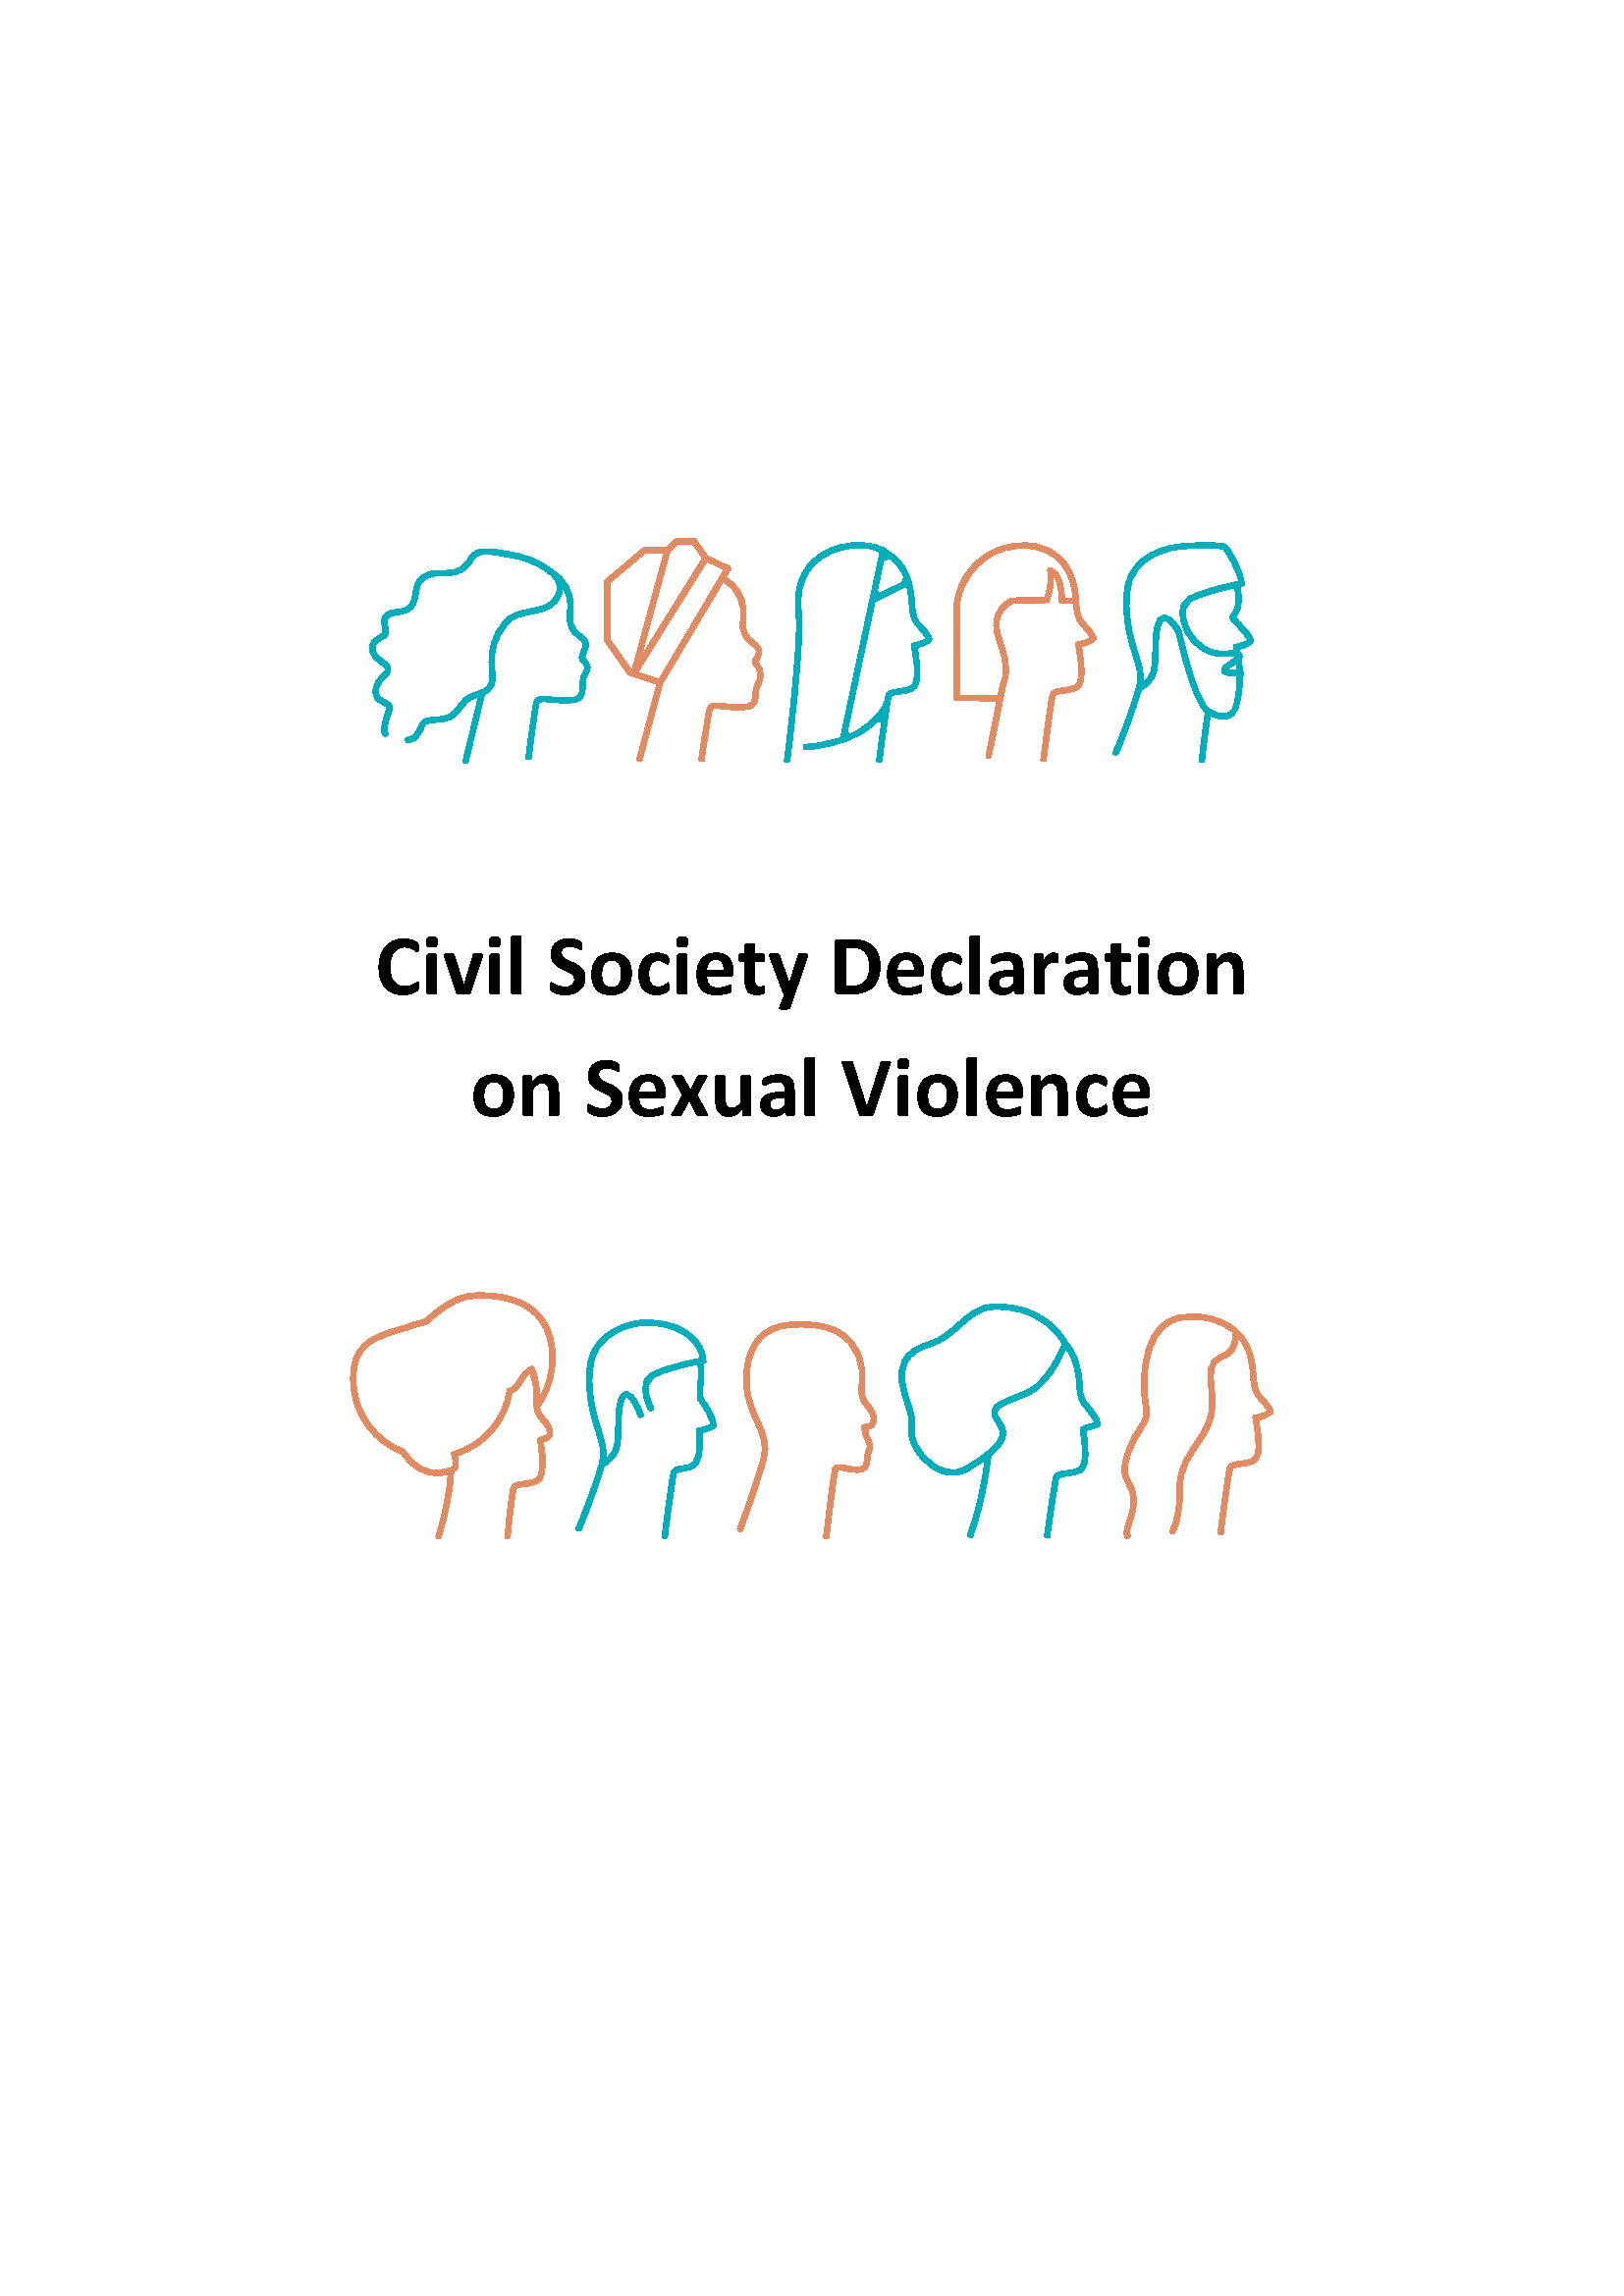 NEW: Civil Society Declaration on Sexual Violence